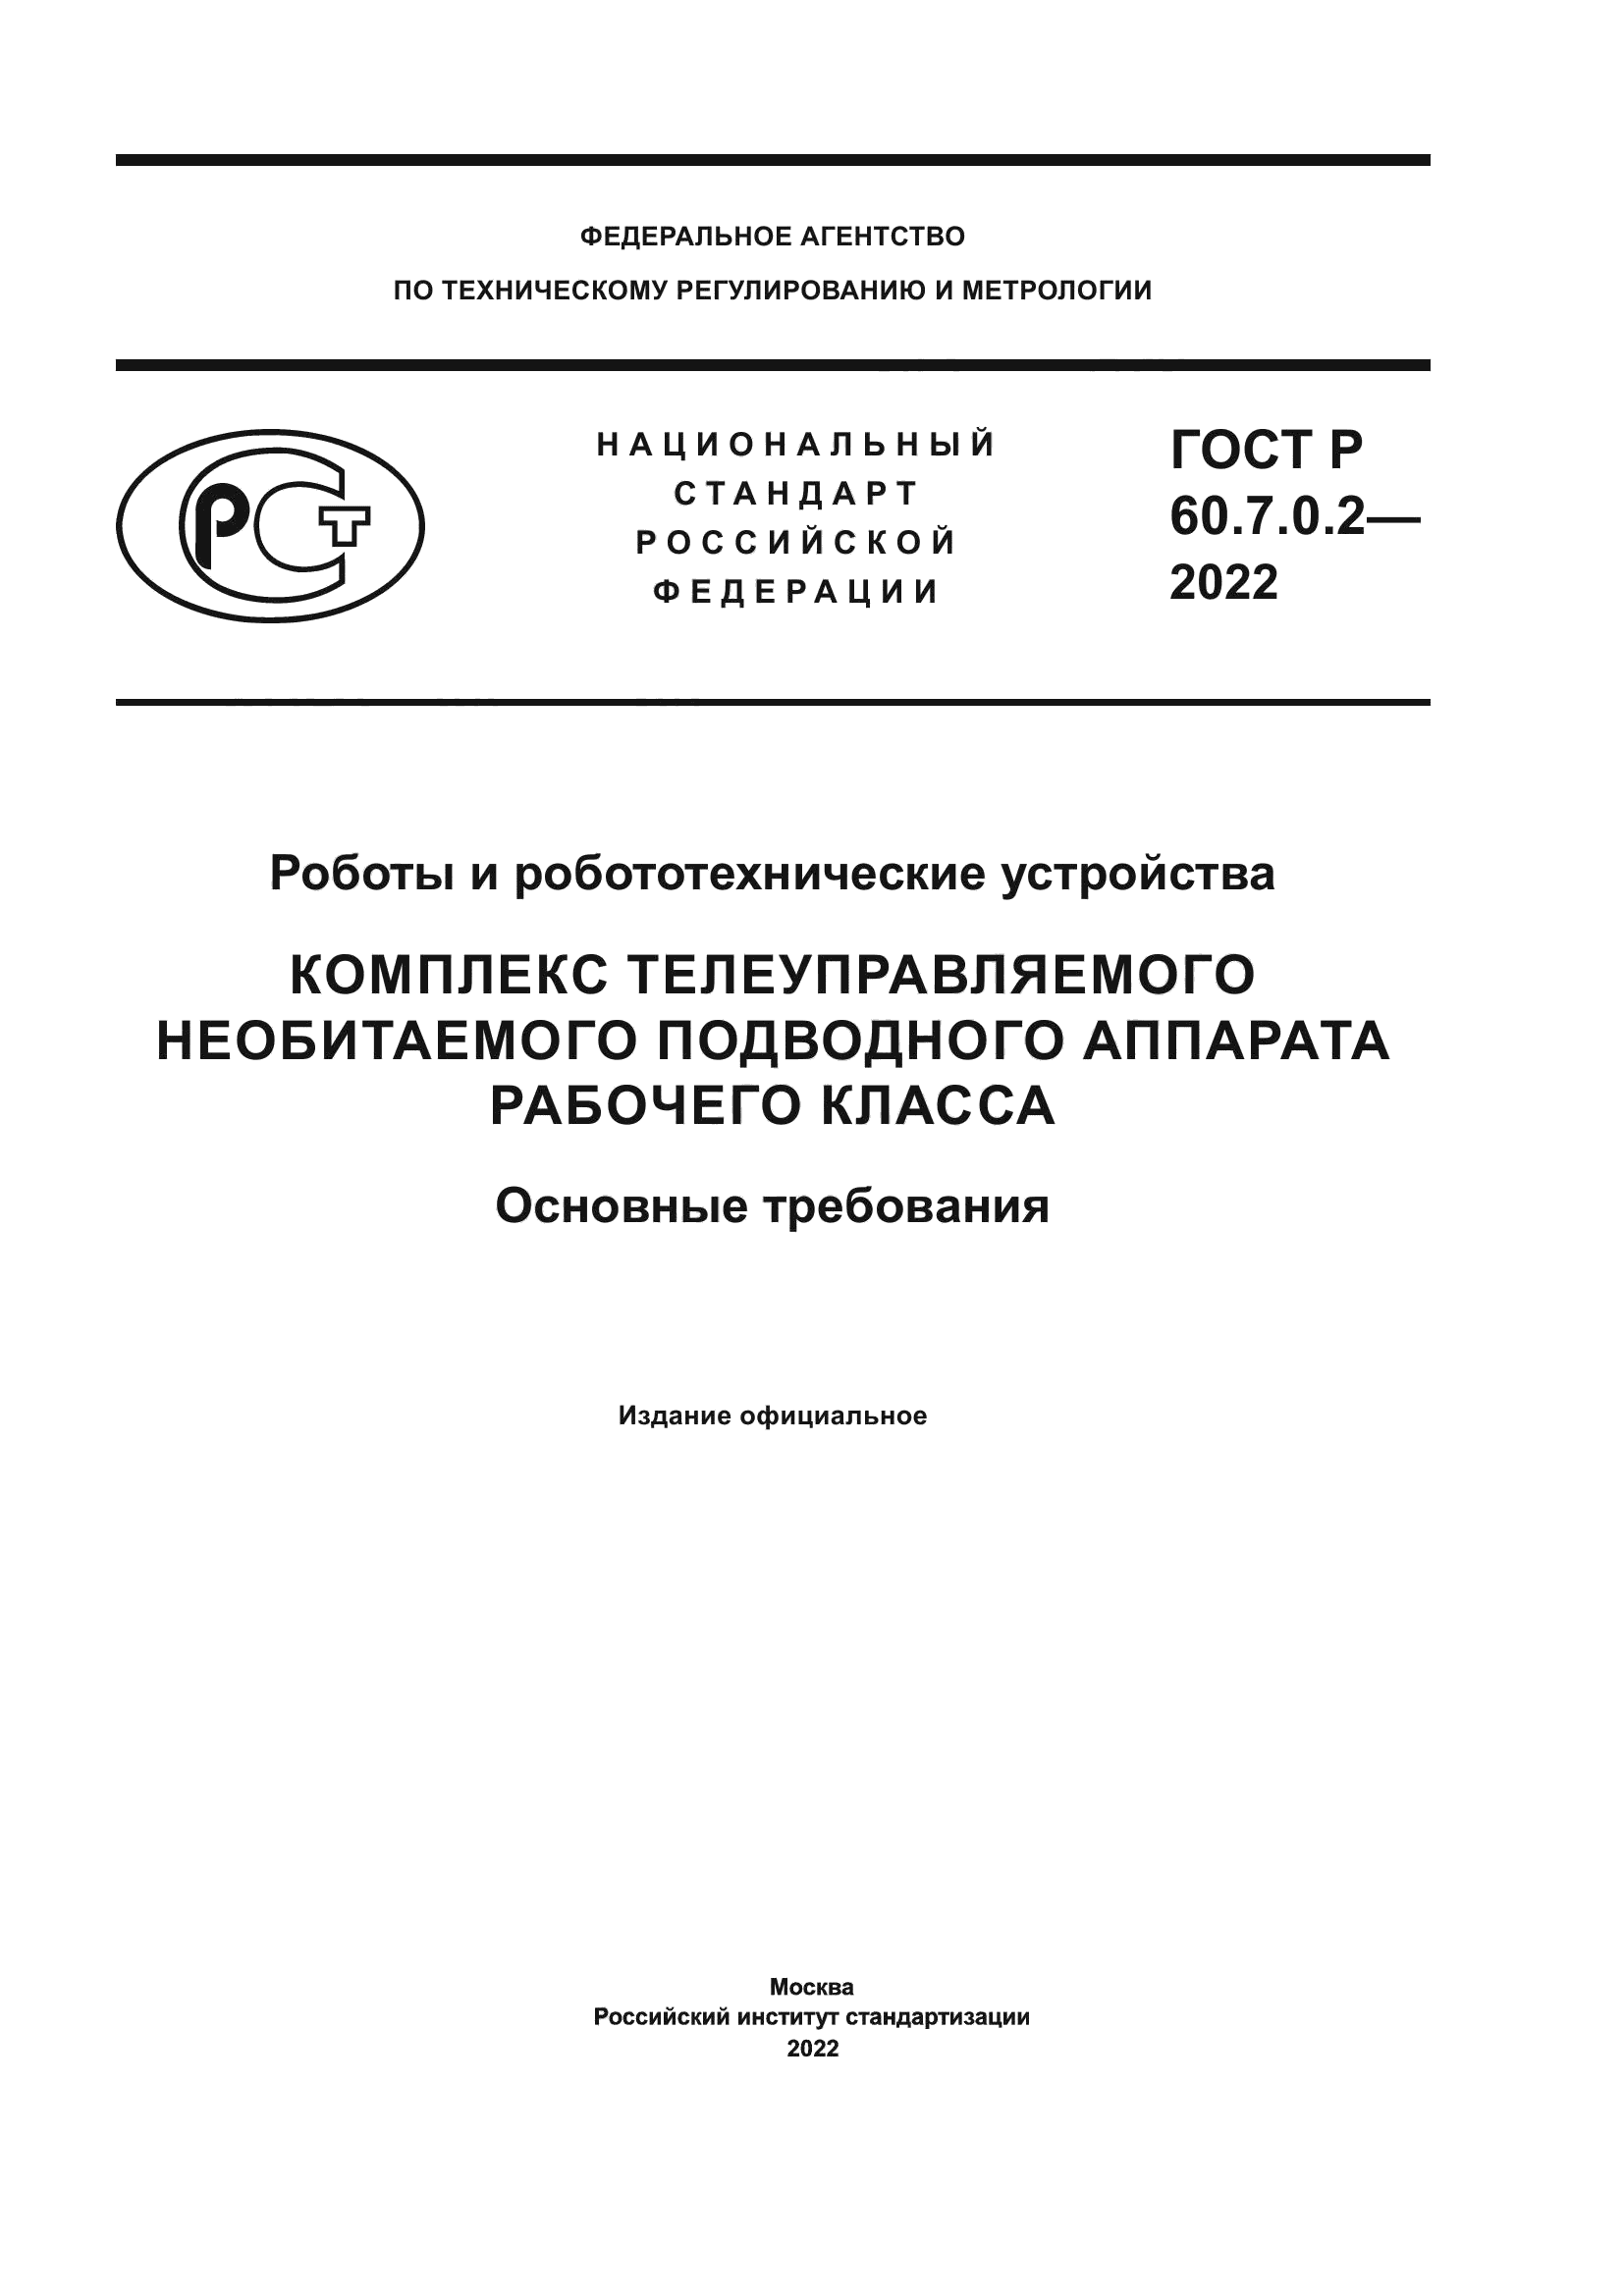 ГОСТ Р 60.7.0.2-2022